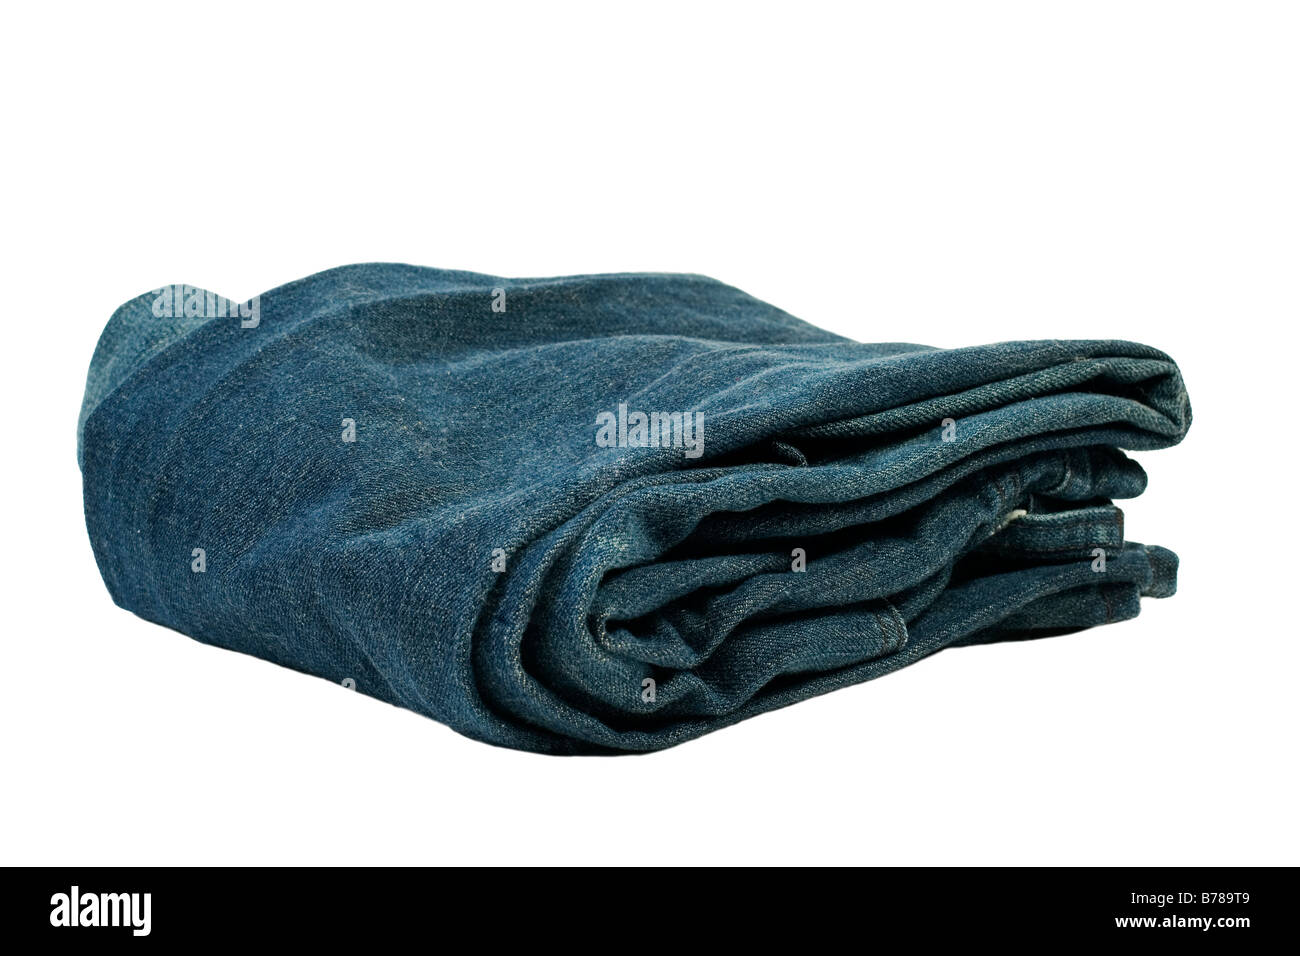 Isolated folded blue jeans against white background Stock Photo - Alamy